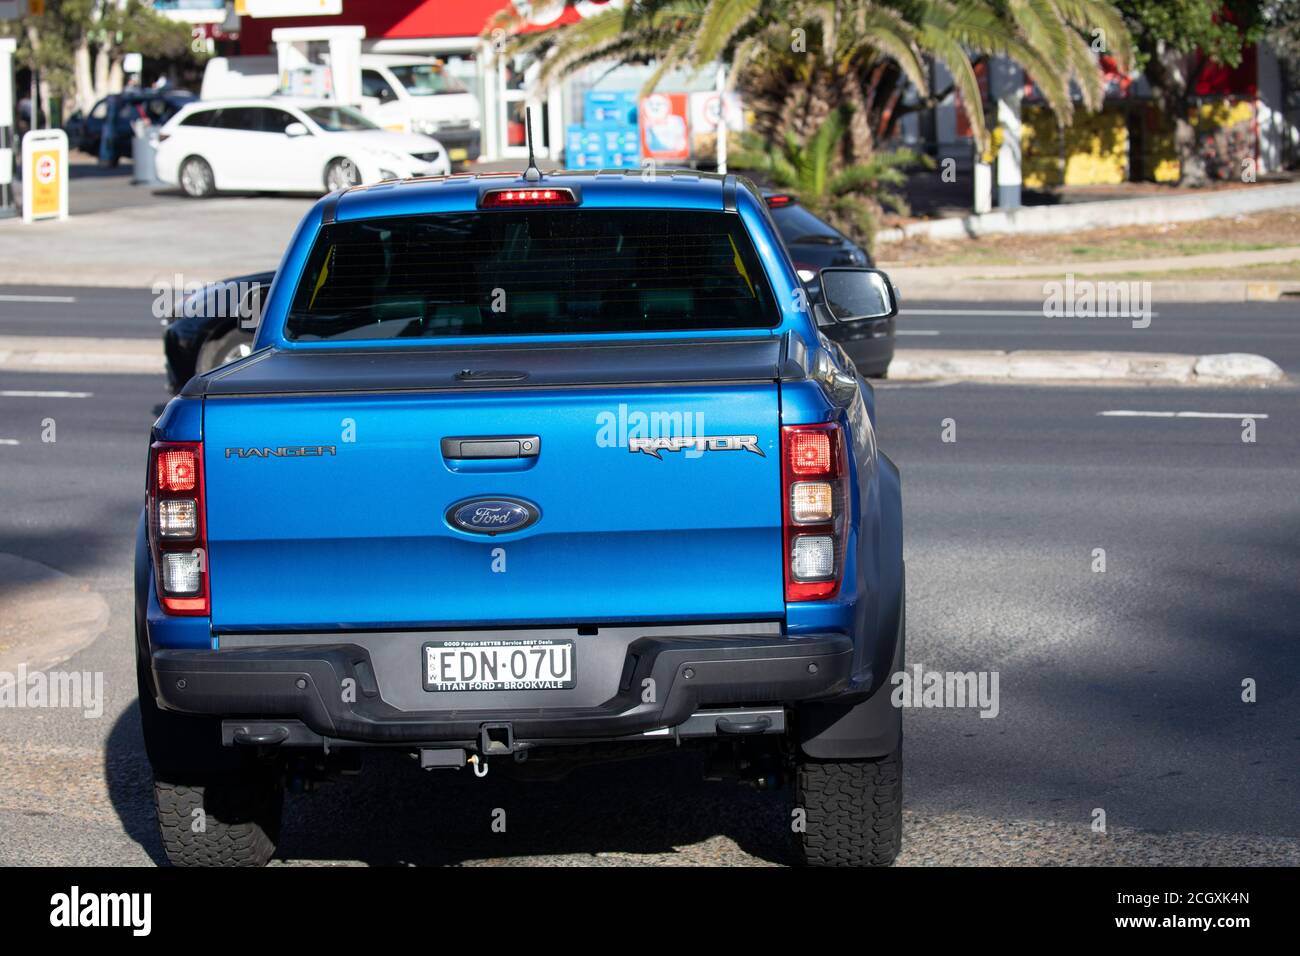 Ford Ranger Raptor rugged ute utility truck in Sydney,NSW,Australia Stock Photo